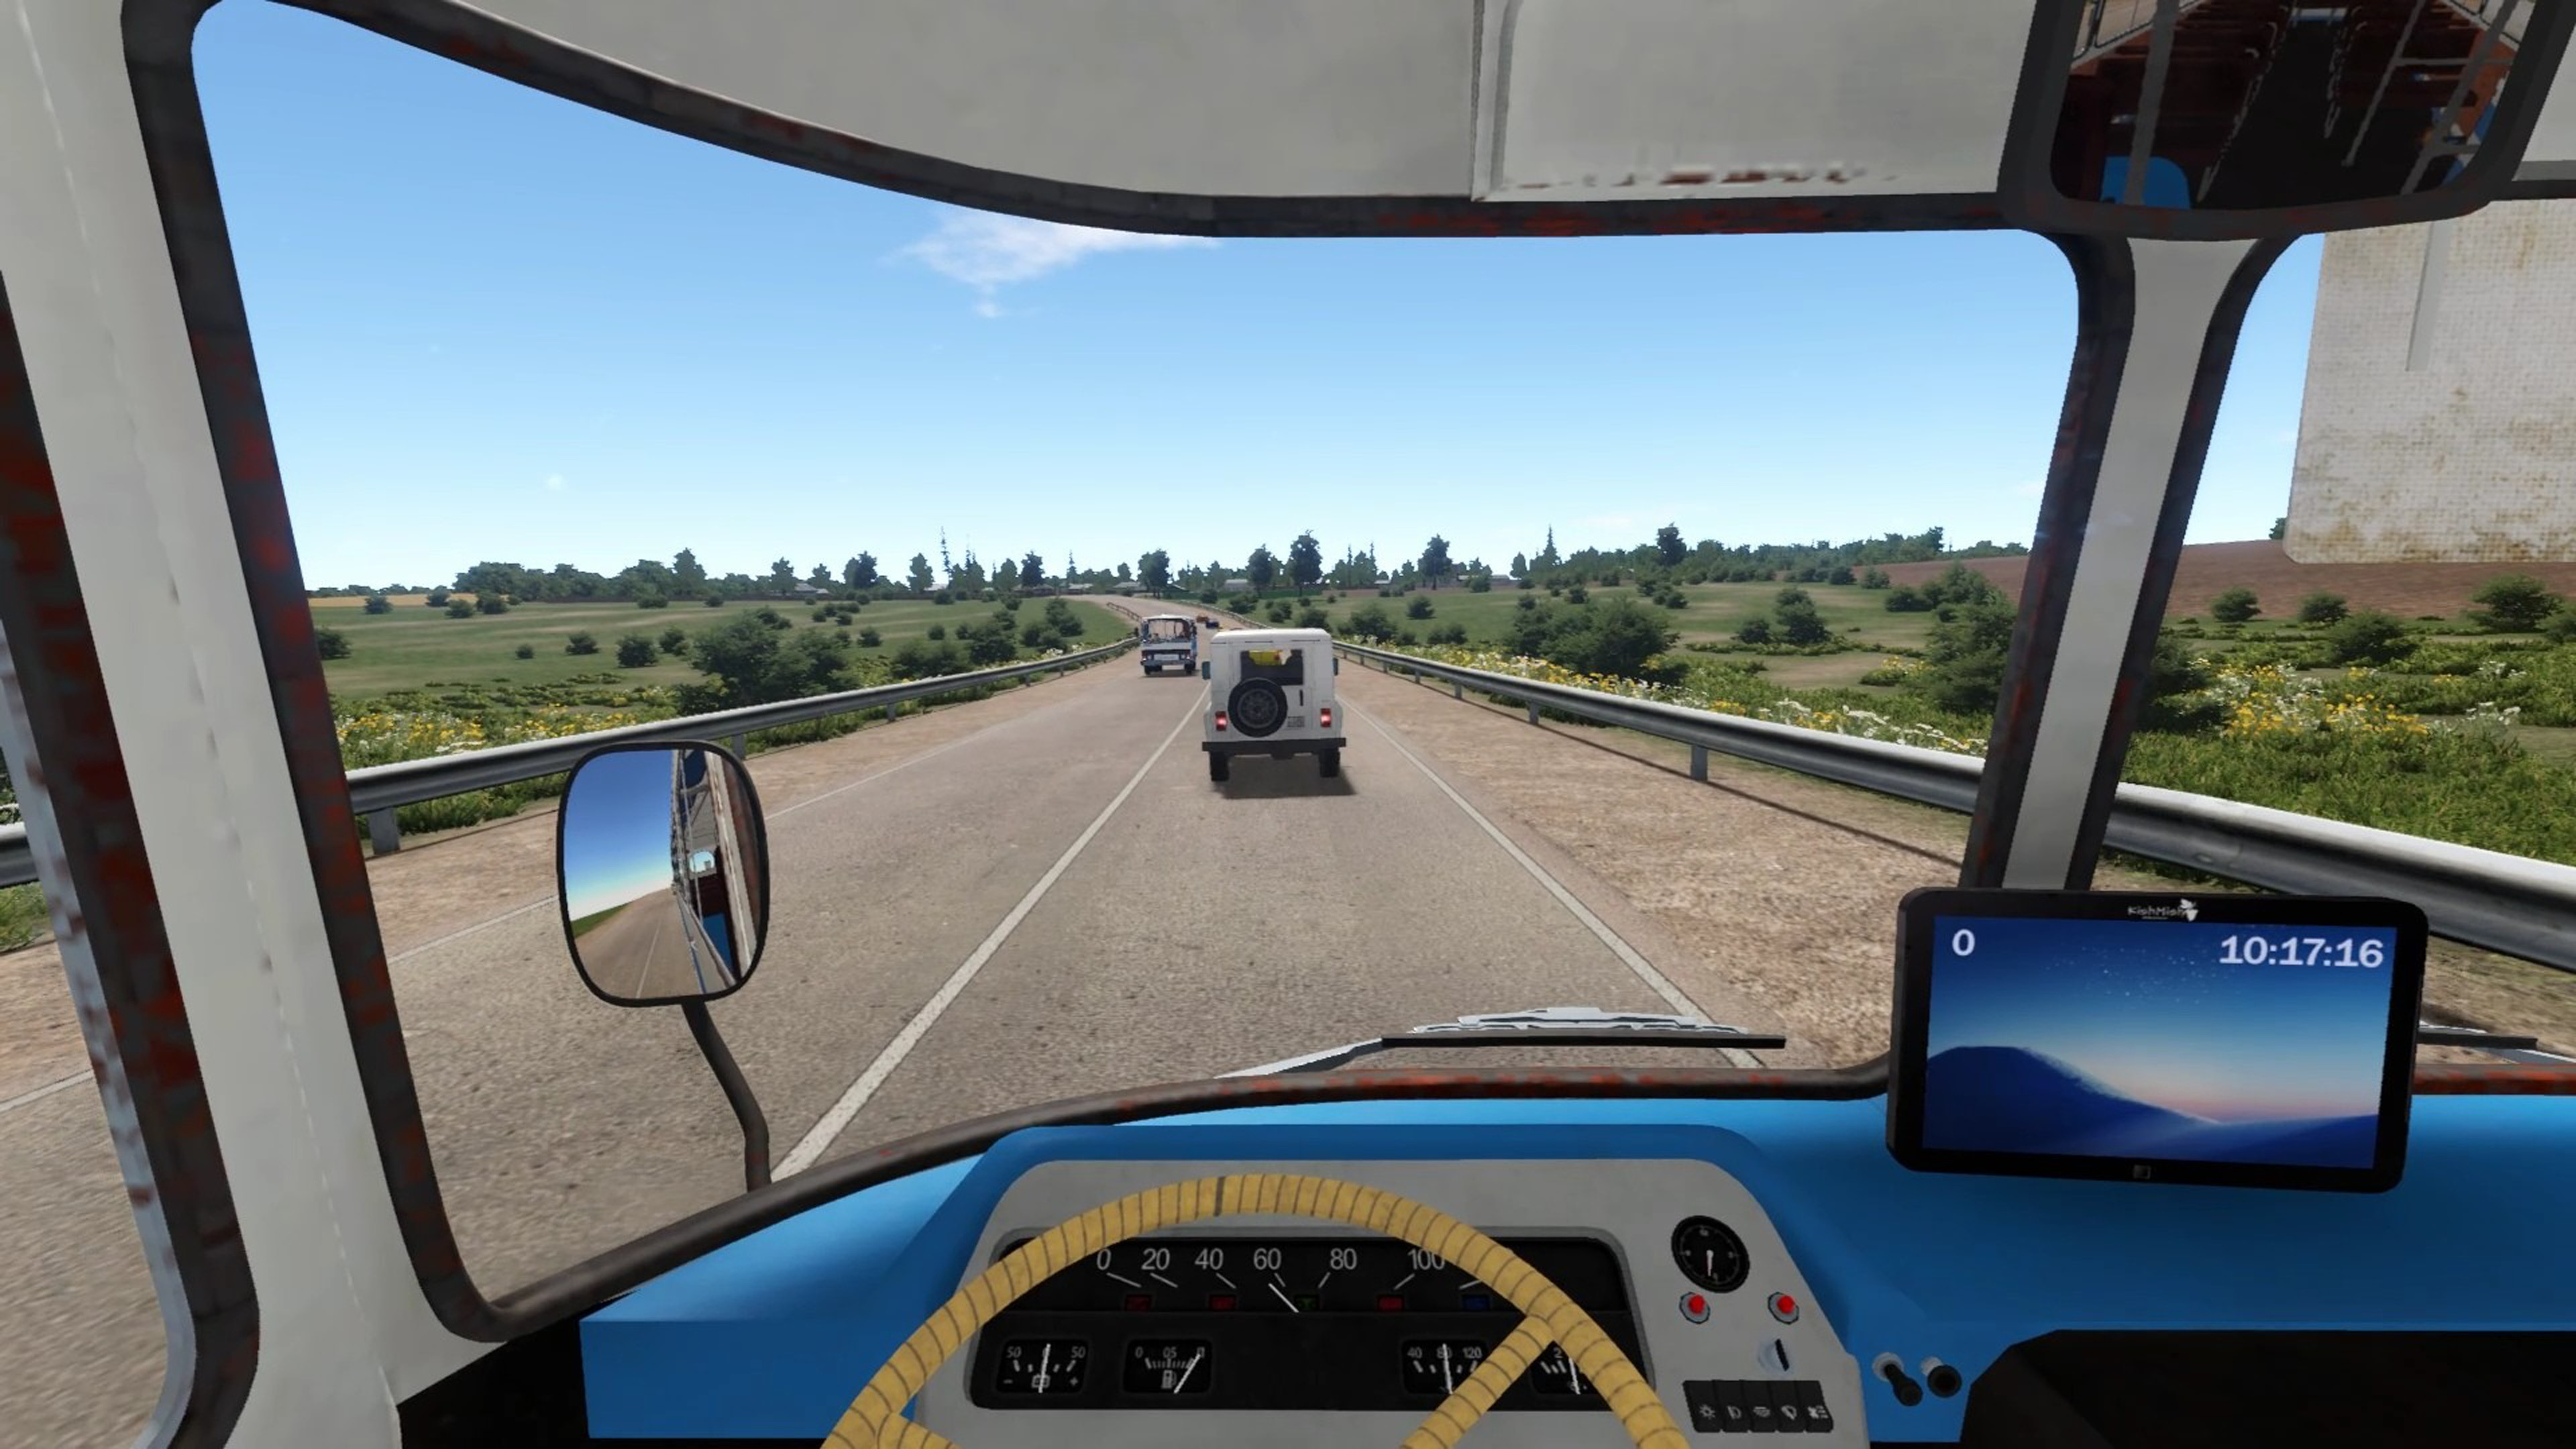 80% Bus Driver Simulator on